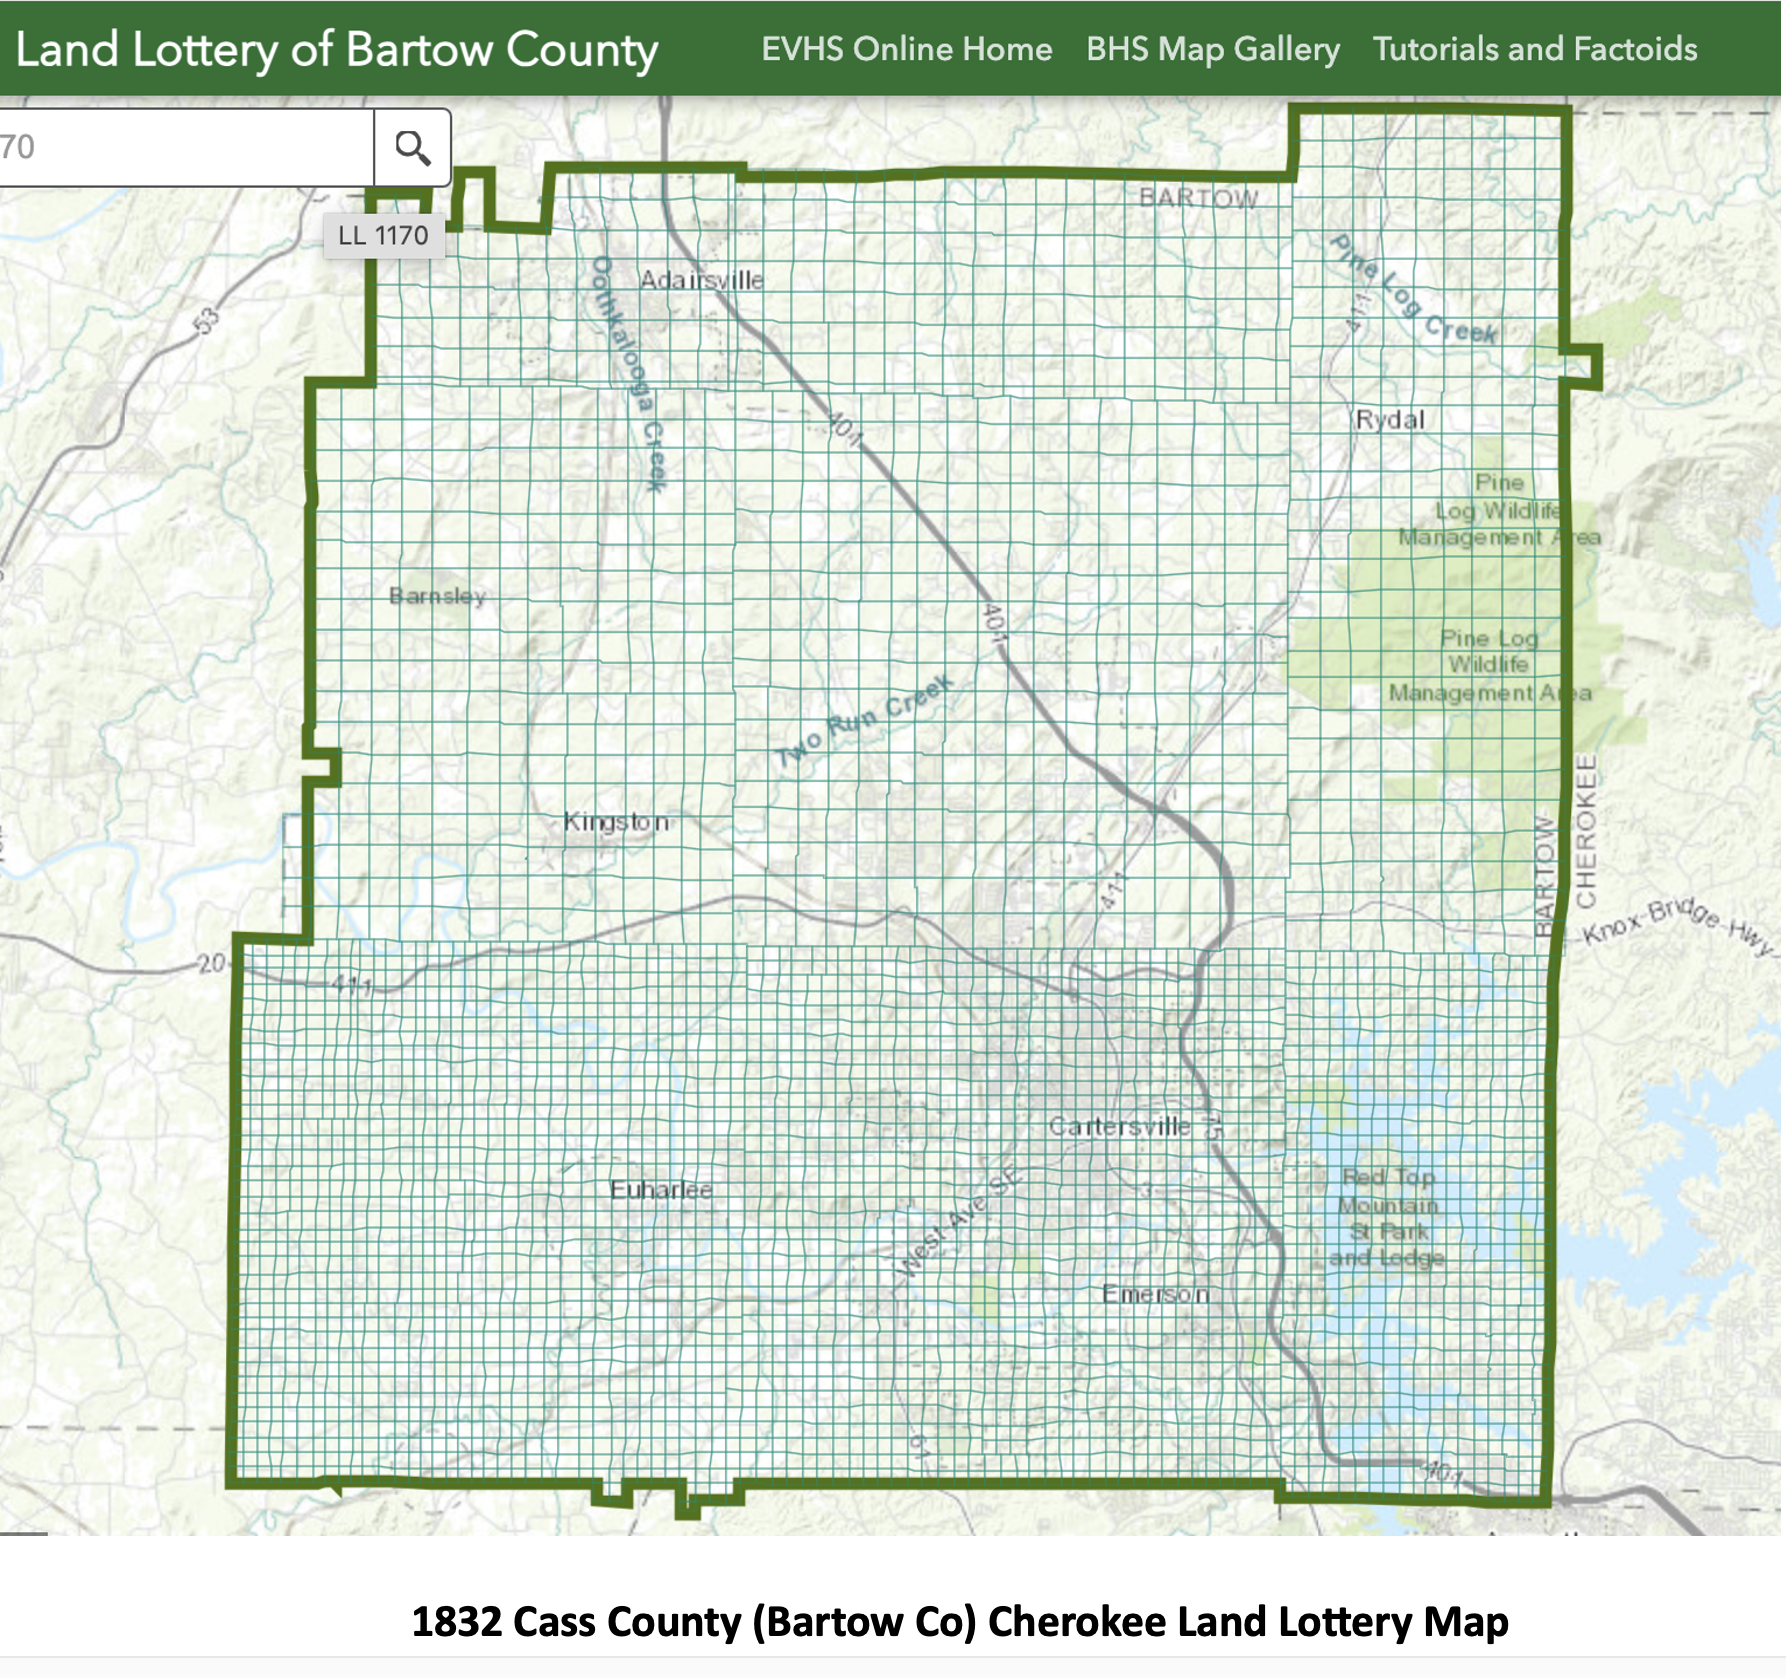 1832 Cass County (Bartow Co) Cherokee Land Lottery Map